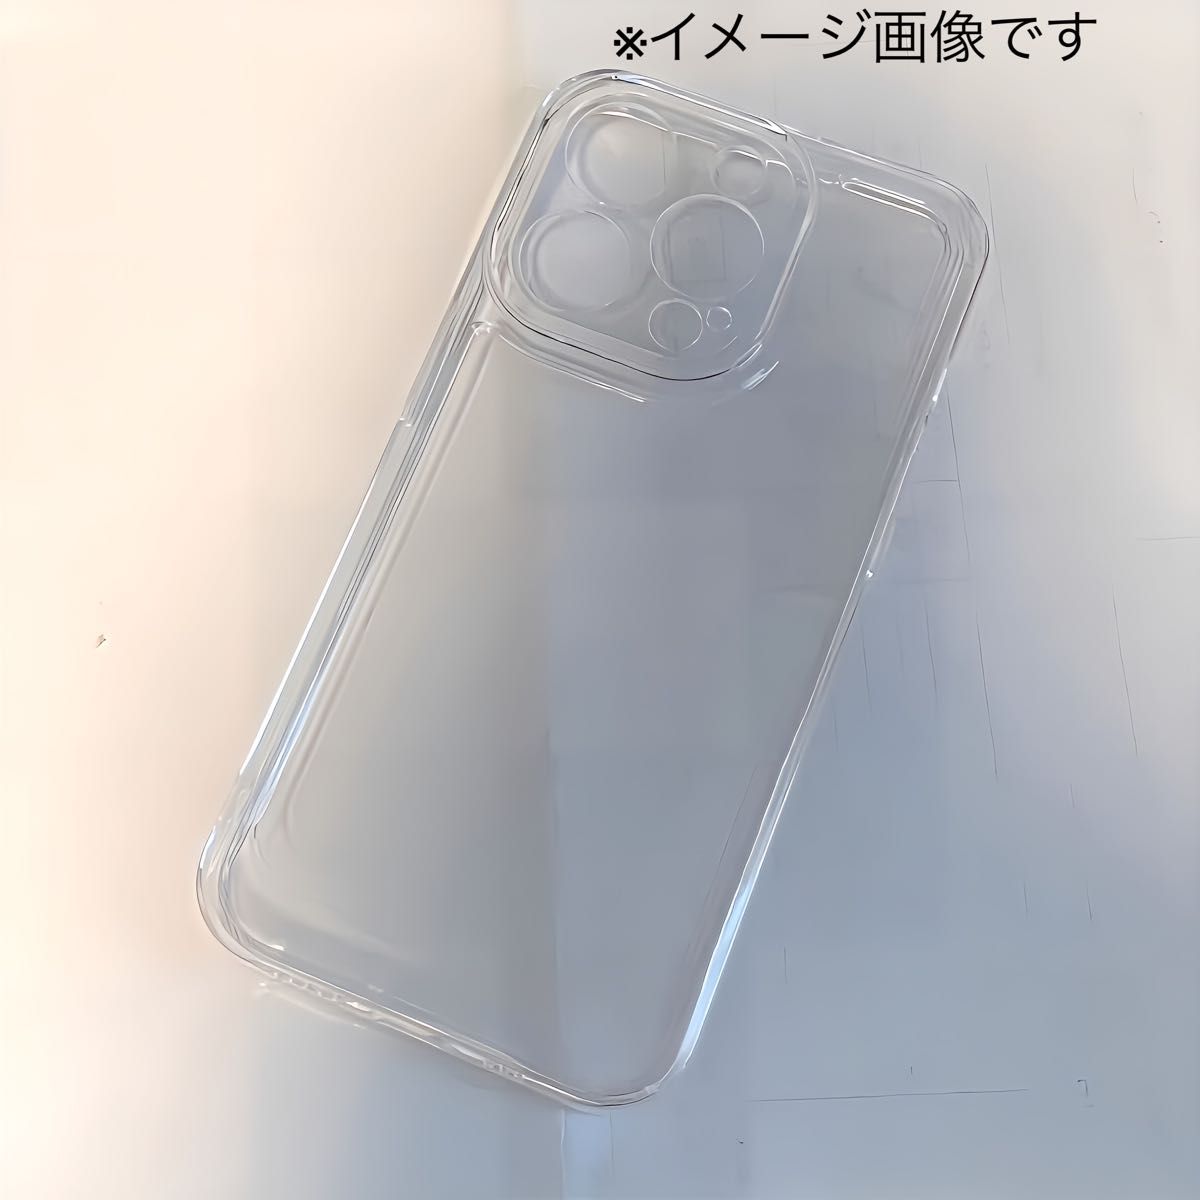 iPhone12miniクリアケース 透明 TPU 強化ガラスフィルム付き スマホケース シンプル 人気